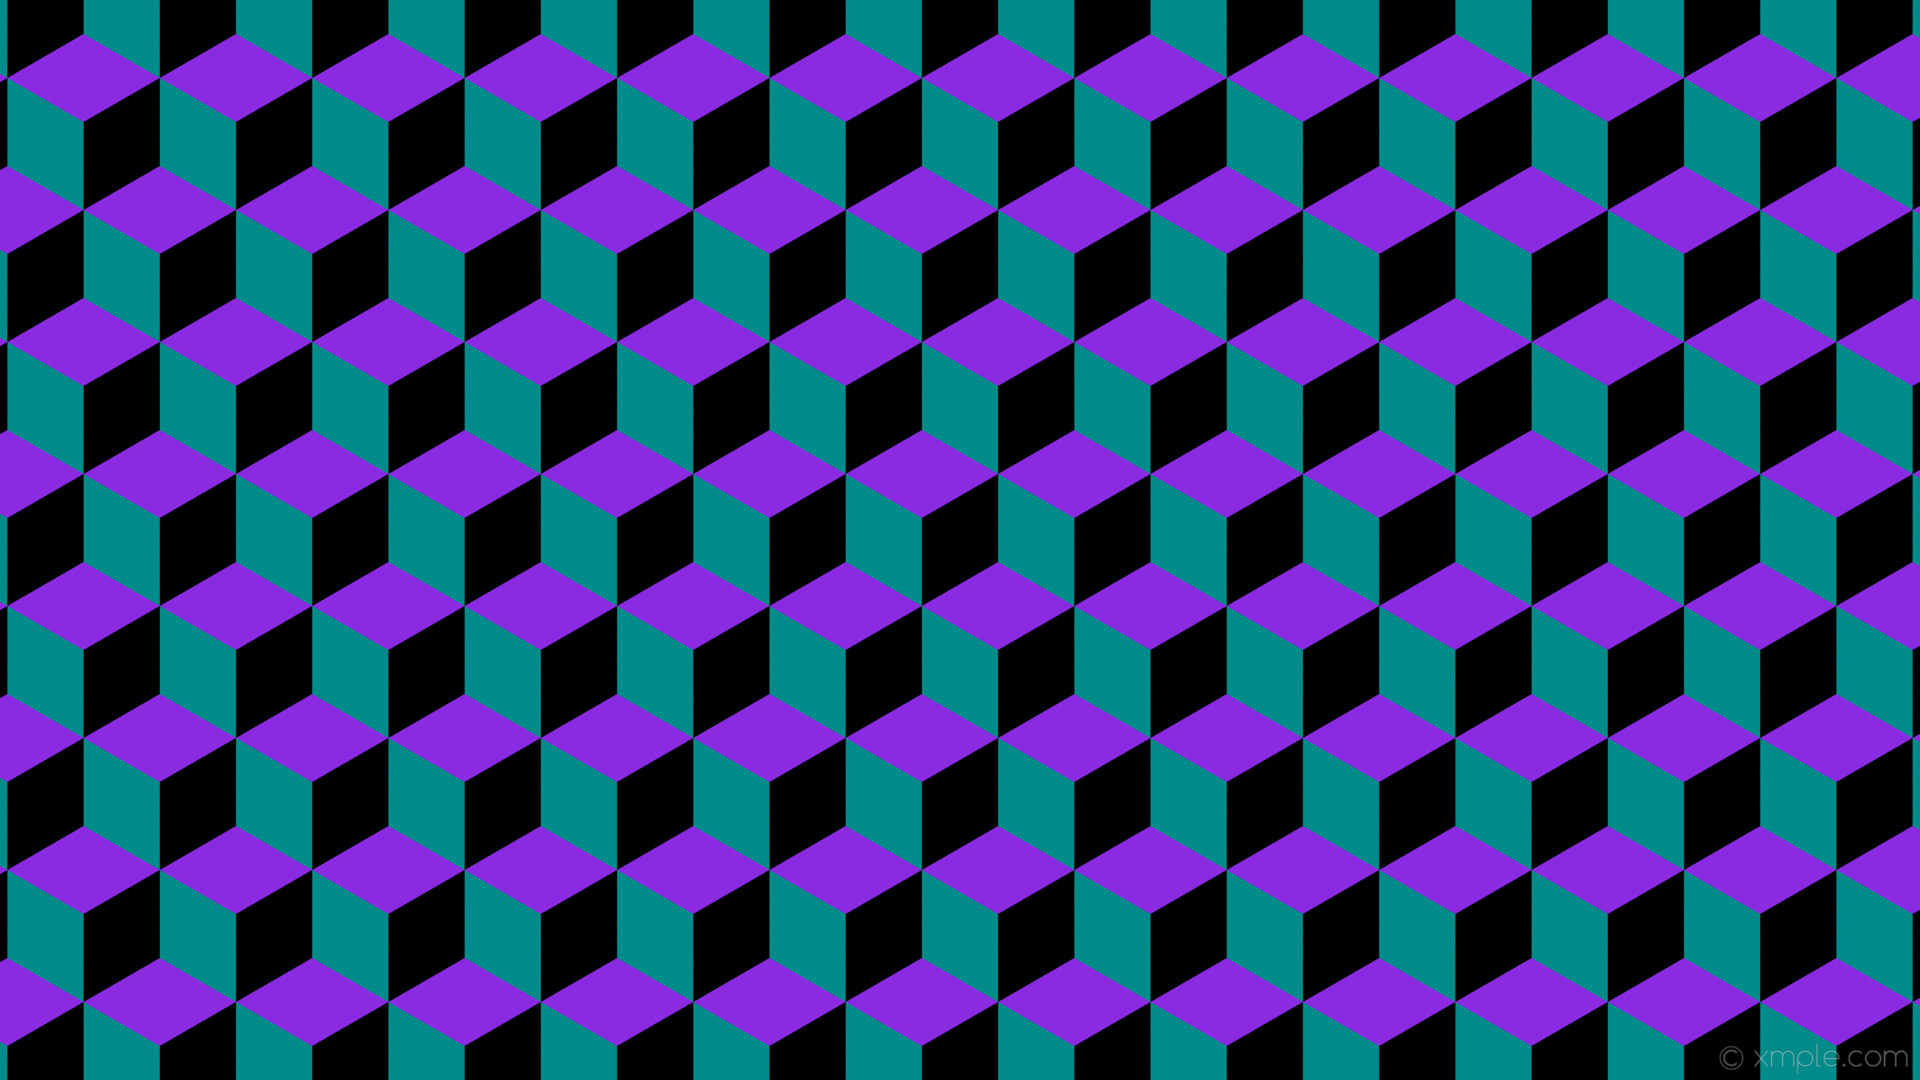 1920x1080 wallpaper green purple 3d cubes black blue violet dark cyan #000000 #8a2be2  #008b8b